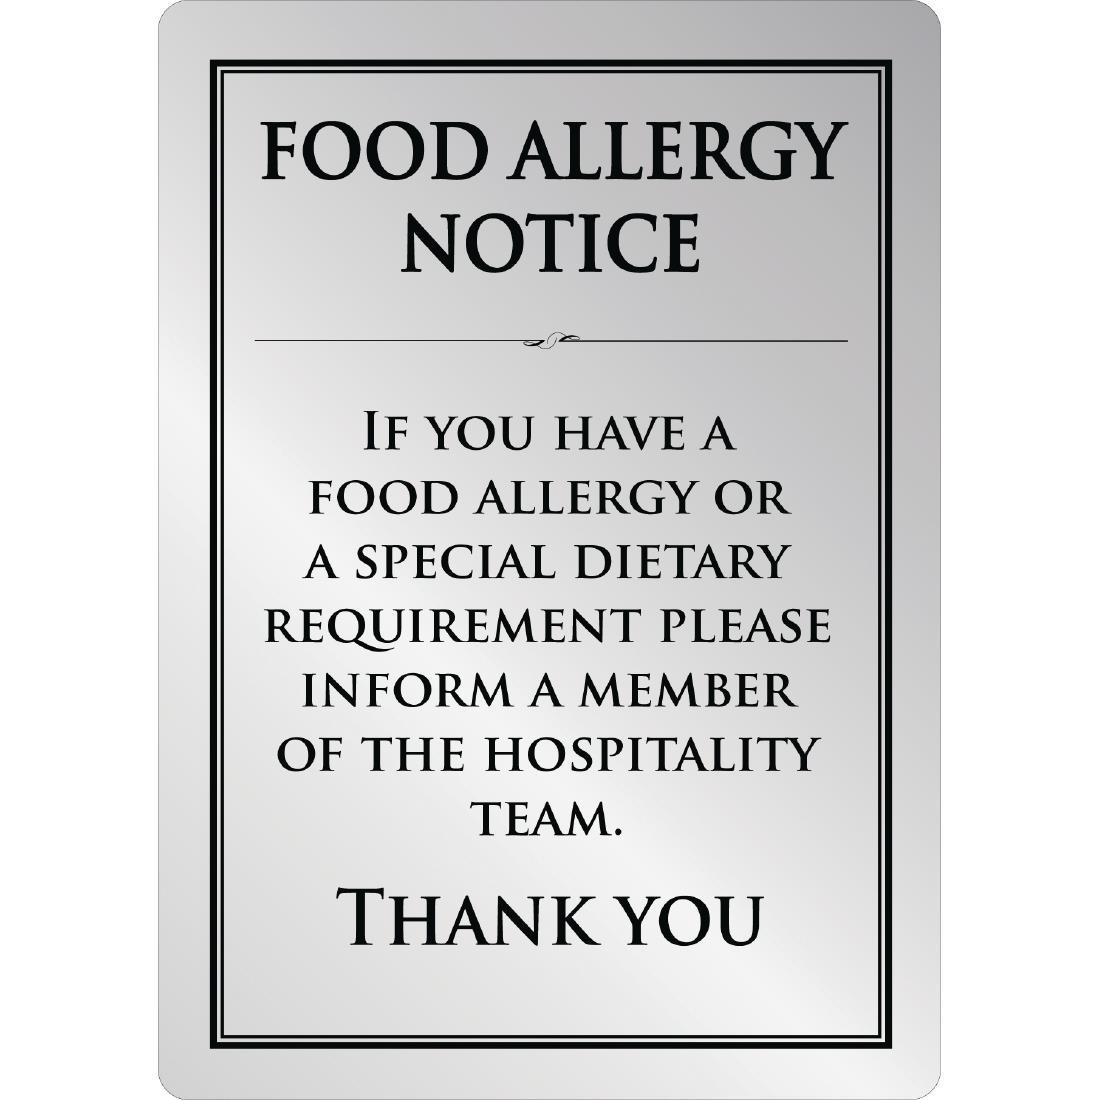 Brushed Steel Food Allergy Sign A4 - GM816  - 1